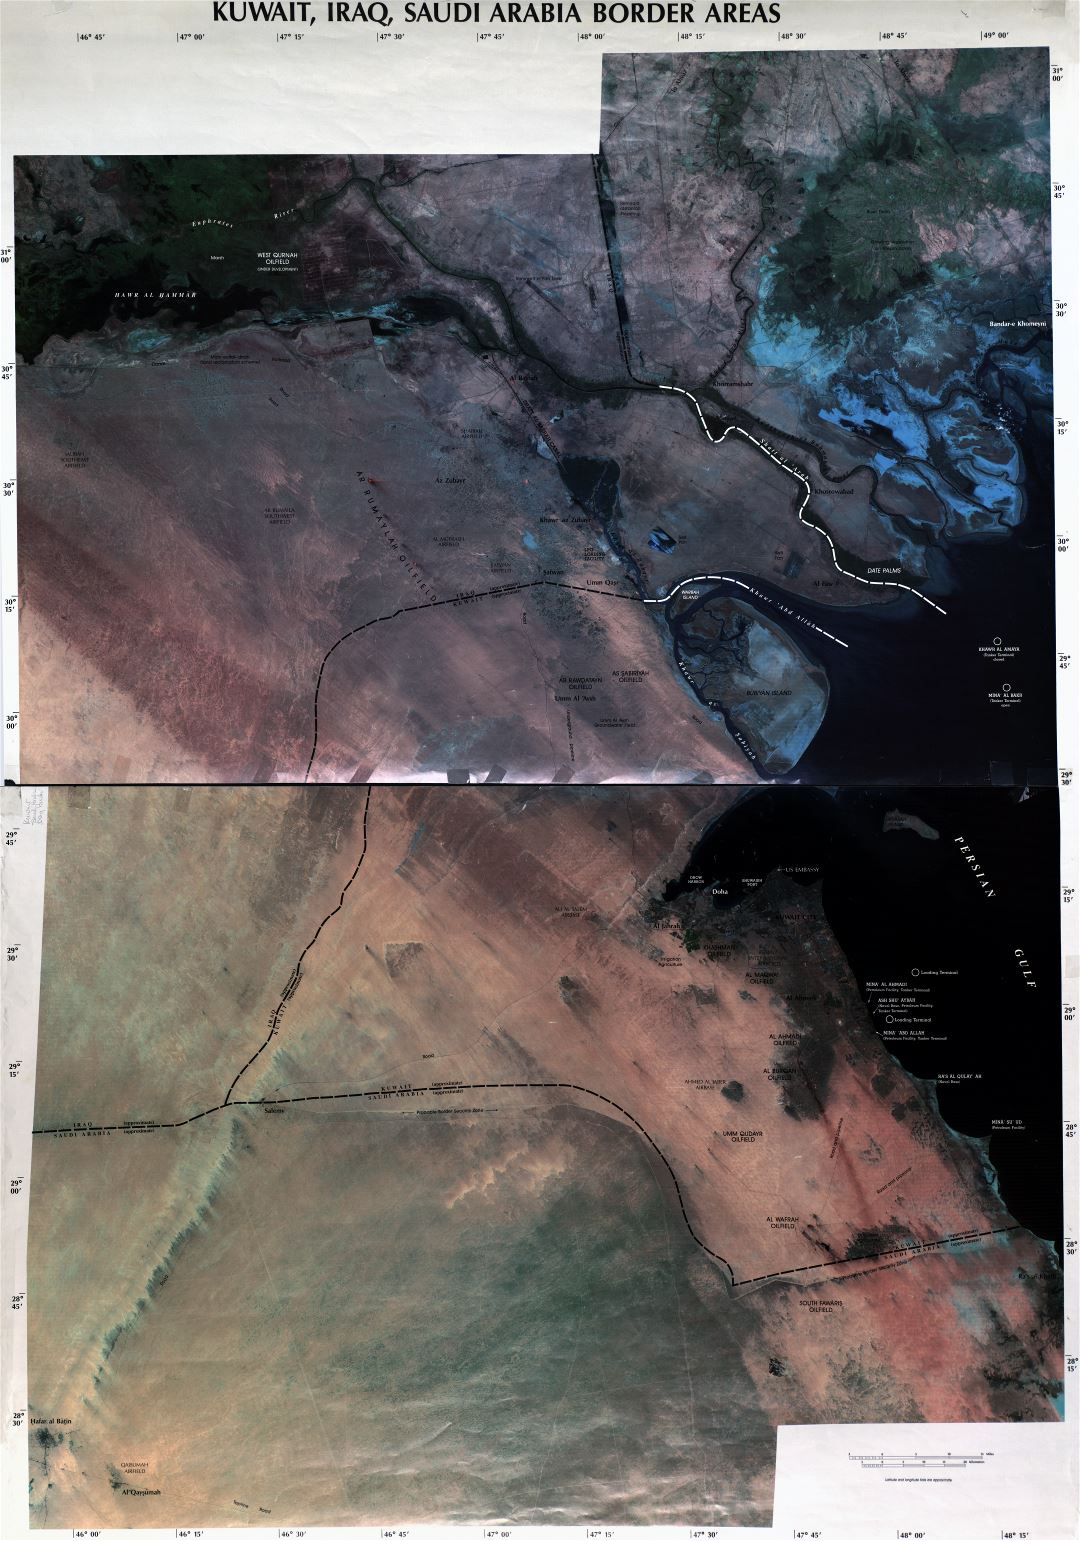 A gran escala detallado mapa satelital de las zonas fronterizas de Kuwait, Iraq y Arabia Saudita - 2003